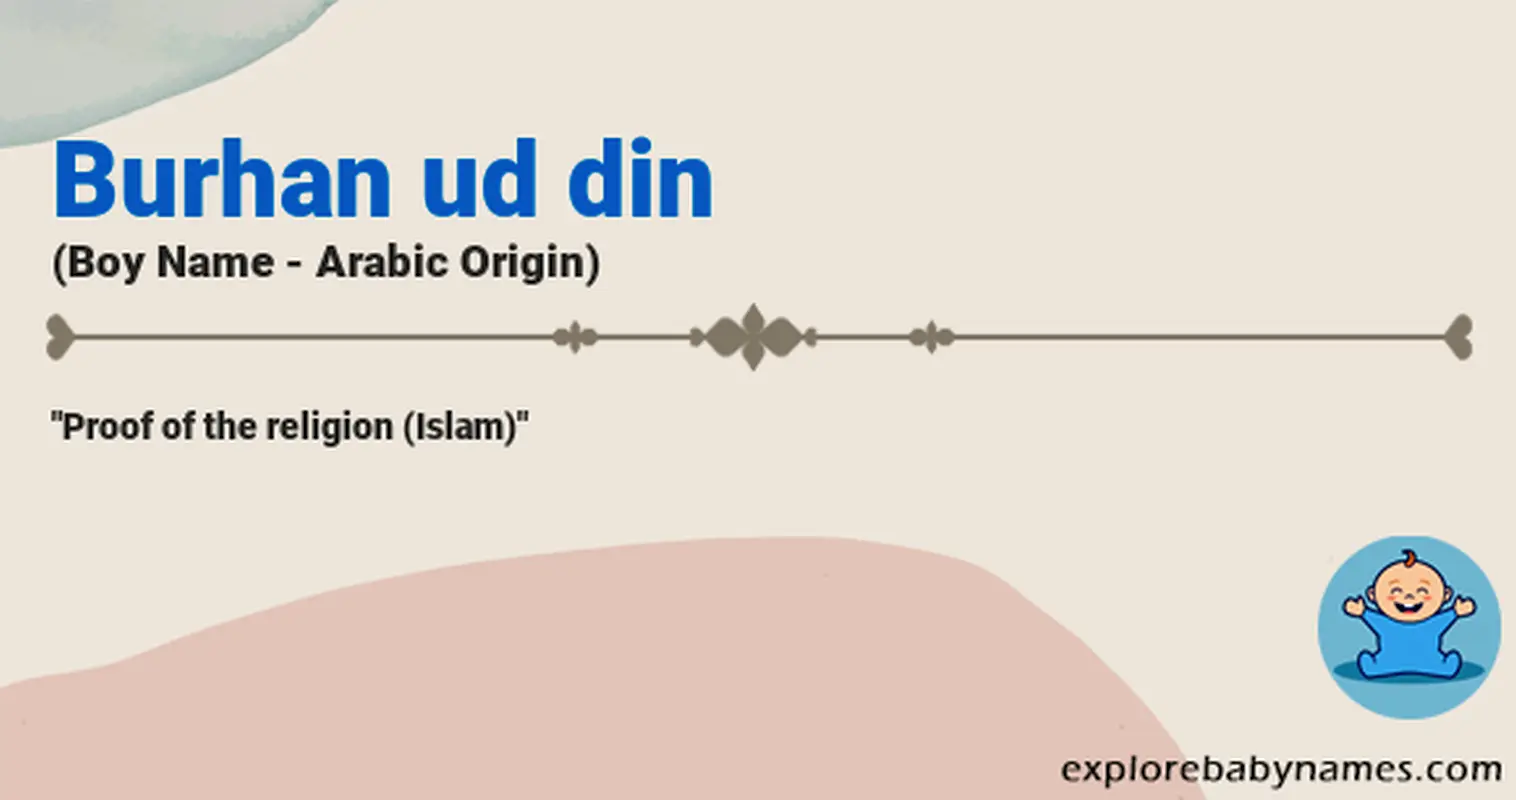 Meaning of Burhan ud din